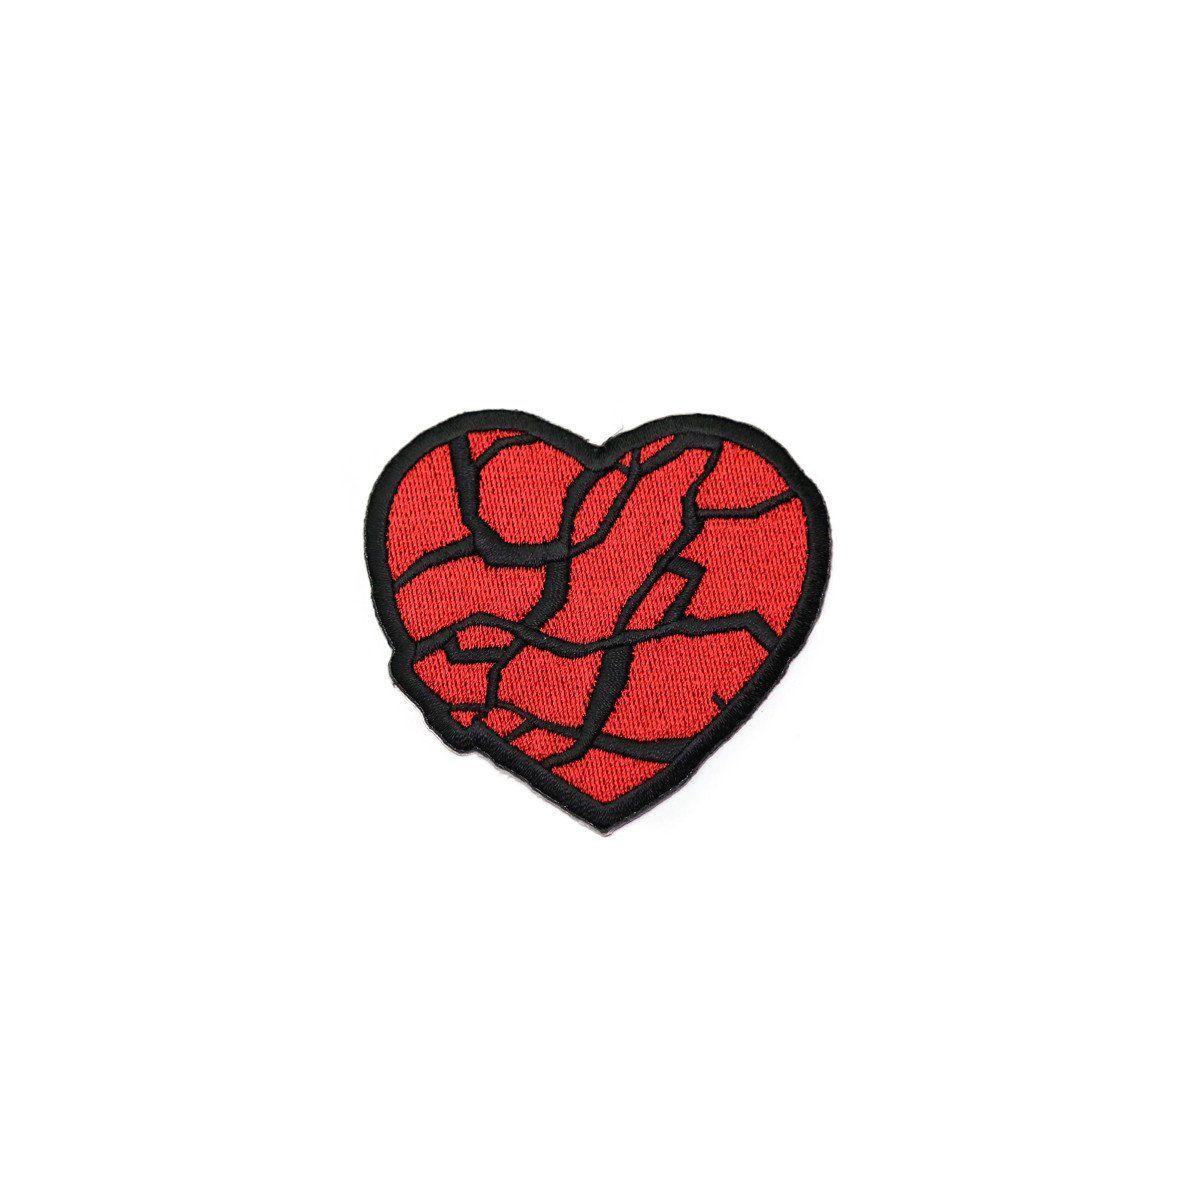 Heartbroken Logo - HEARTBROKEN LOGO PATCH